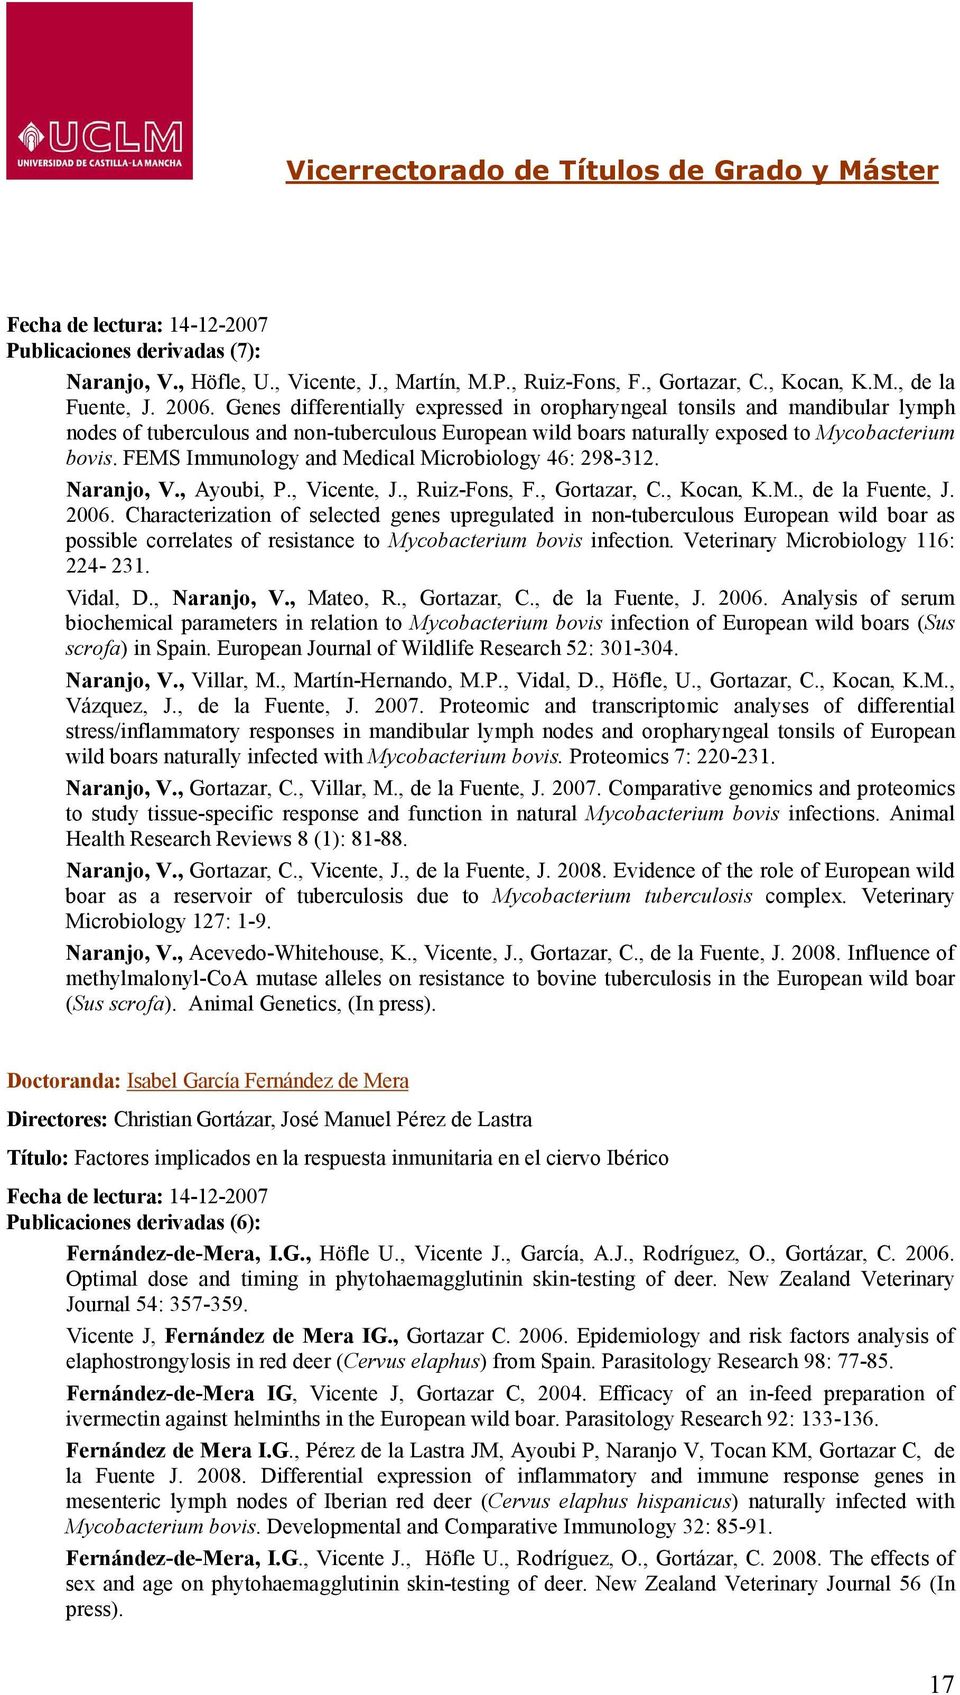 FEMS Immunology and Medical Microbiology 46: 298-312. Naranjo, V., Ayoubi, P., Vicente, J., Ruiz-Fons, F., Gortazar, C., Kocan, K.M., de la Fuente, J. 2006.